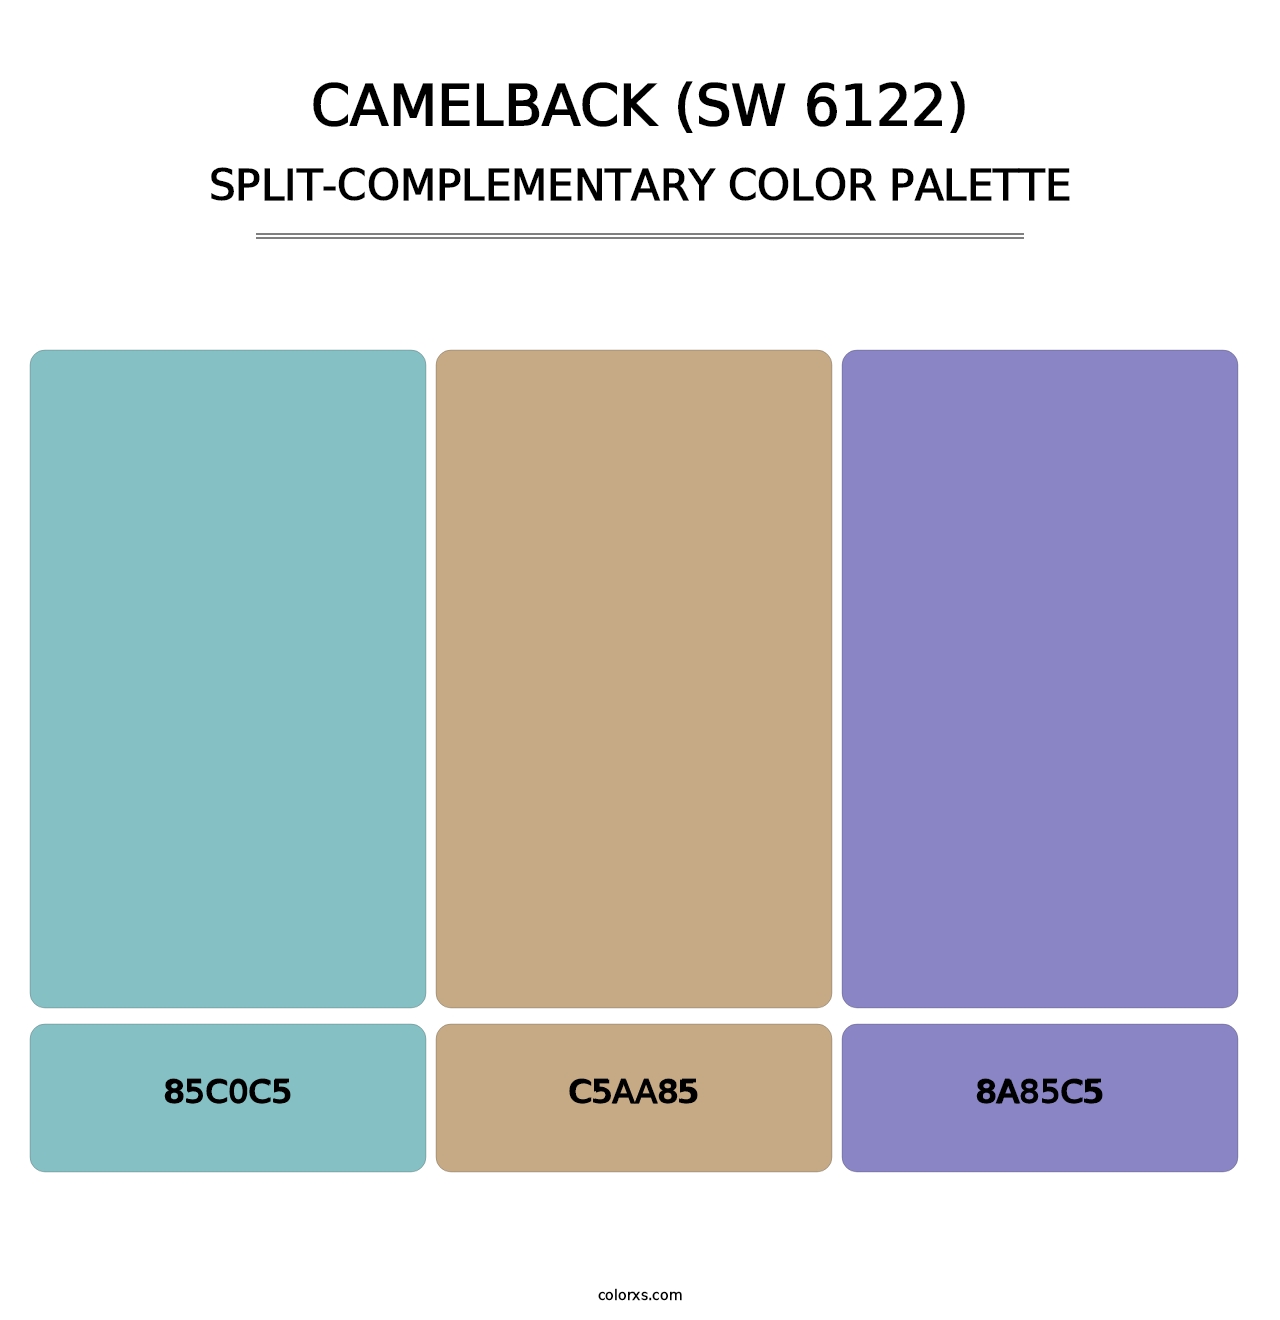 Camelback (SW 6122) - Split-Complementary Color Palette